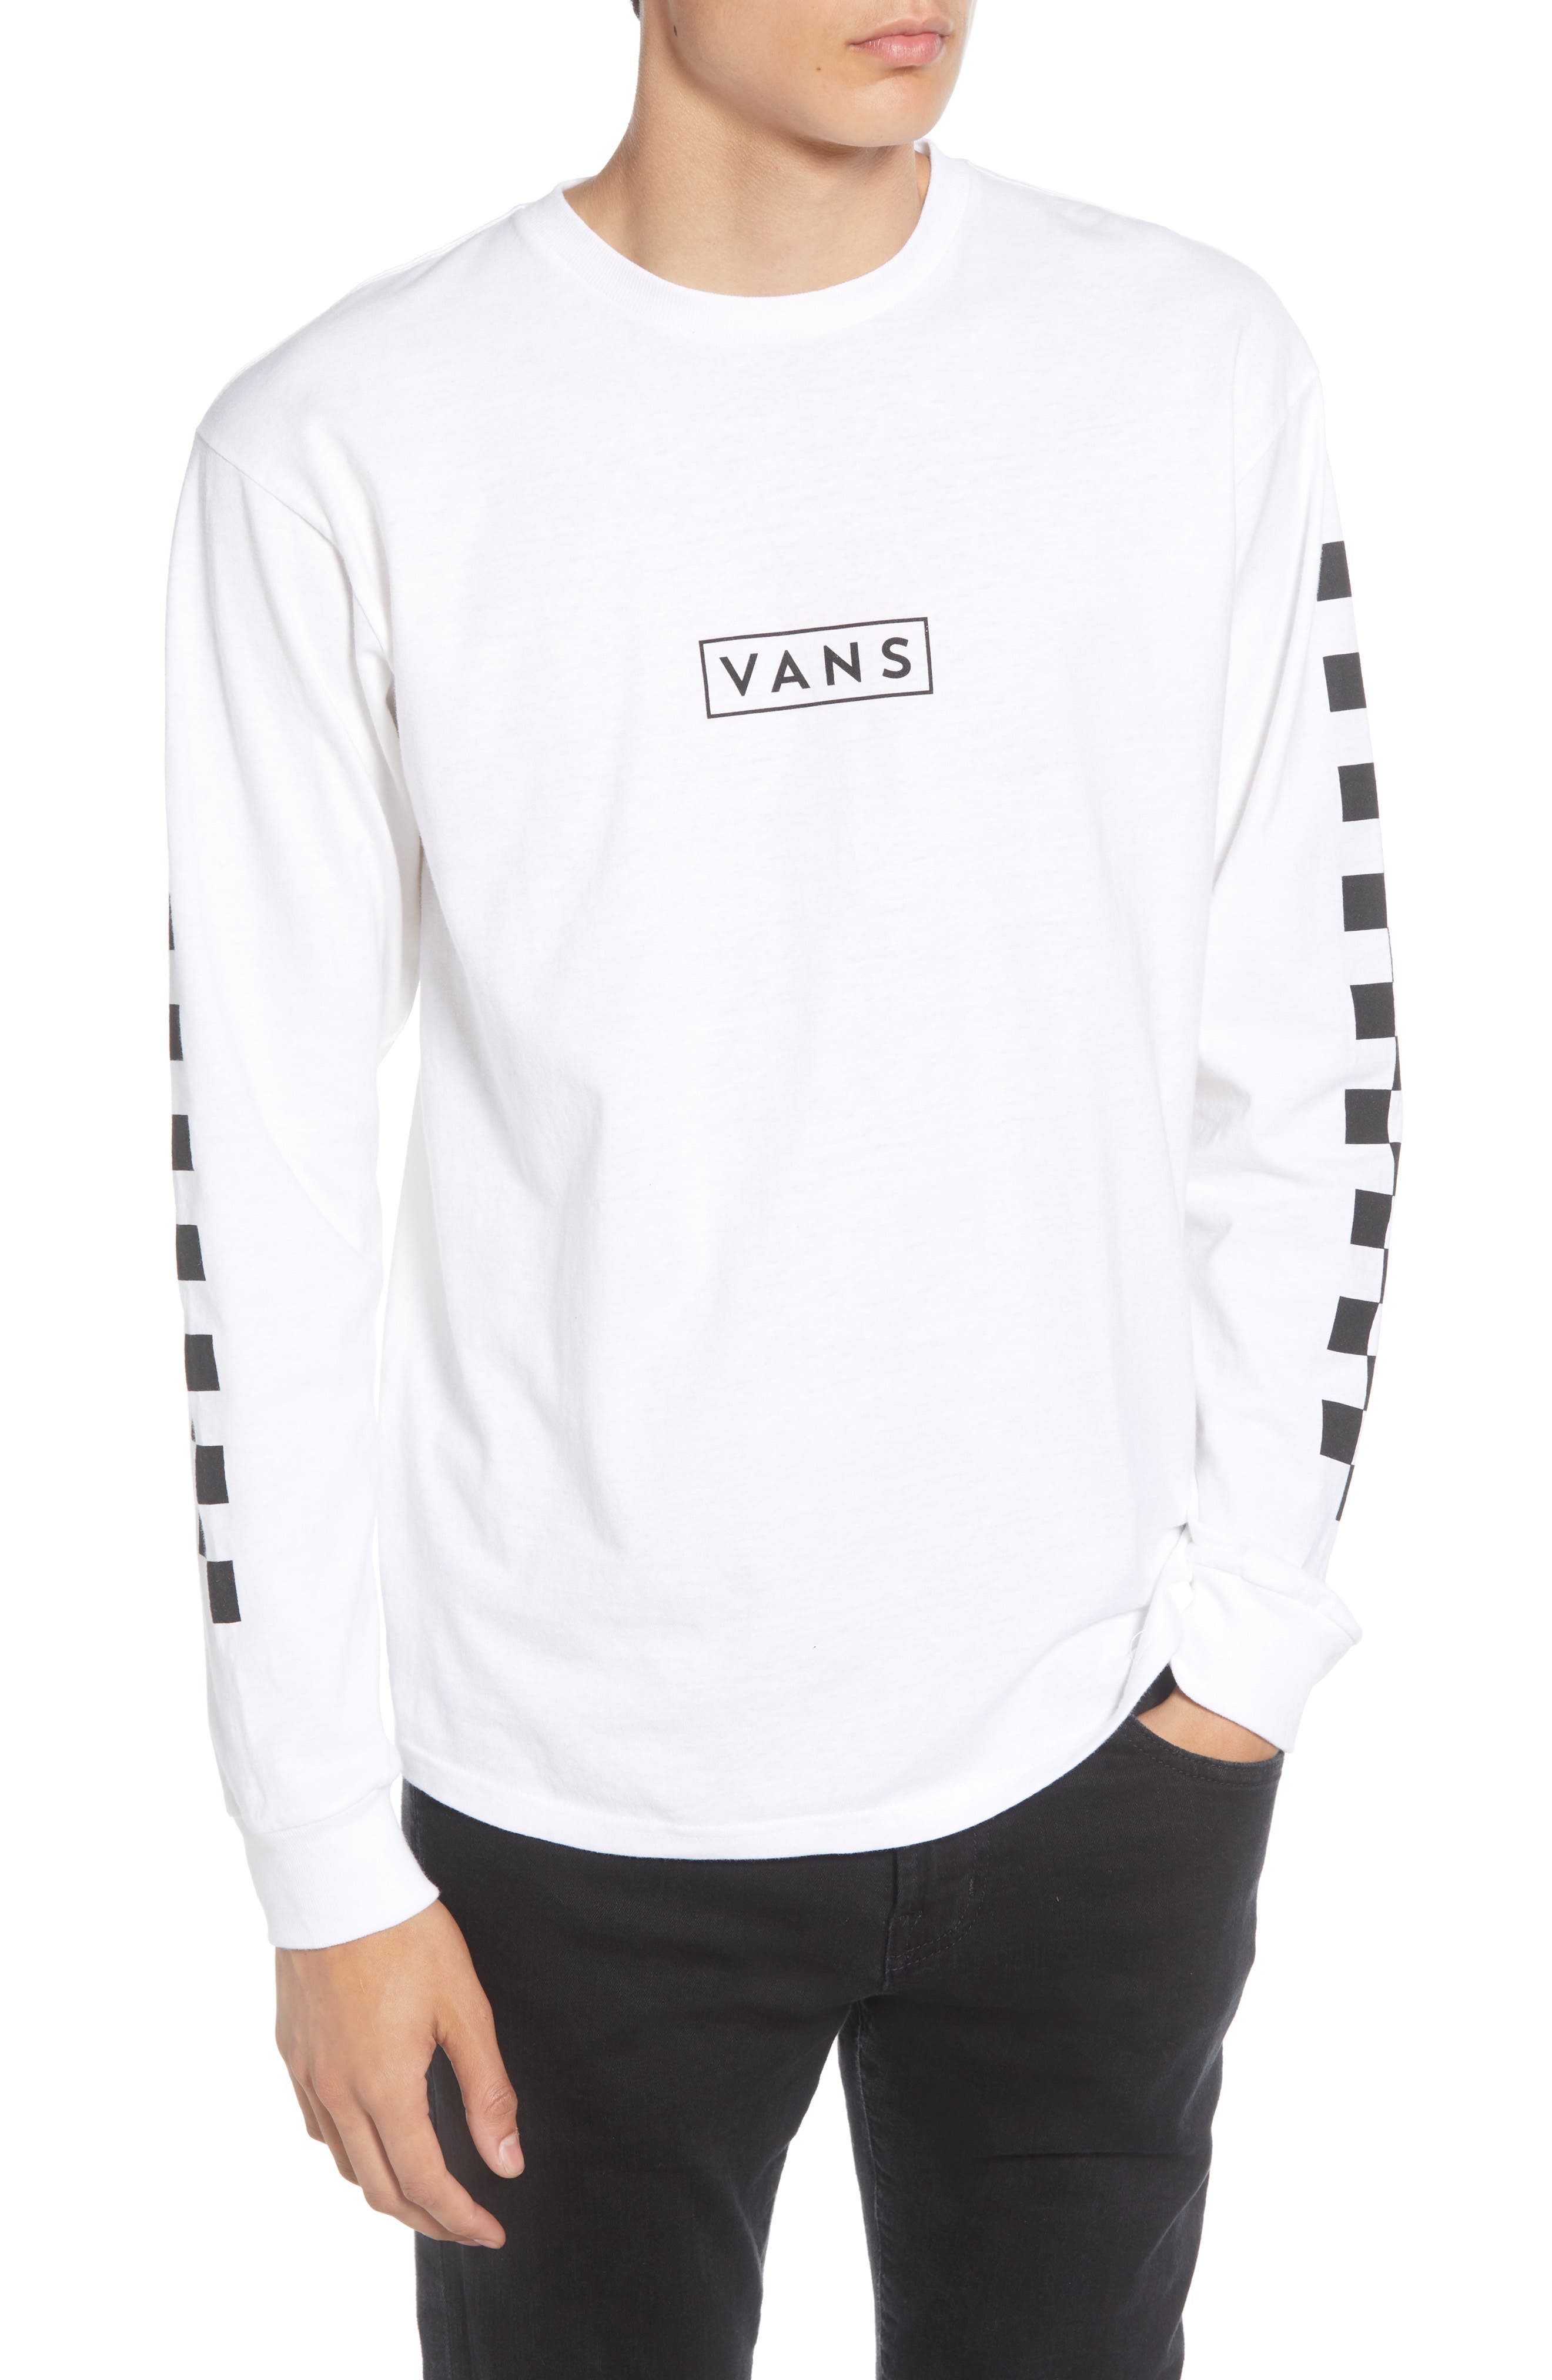 long sleeve checkered vans shirt